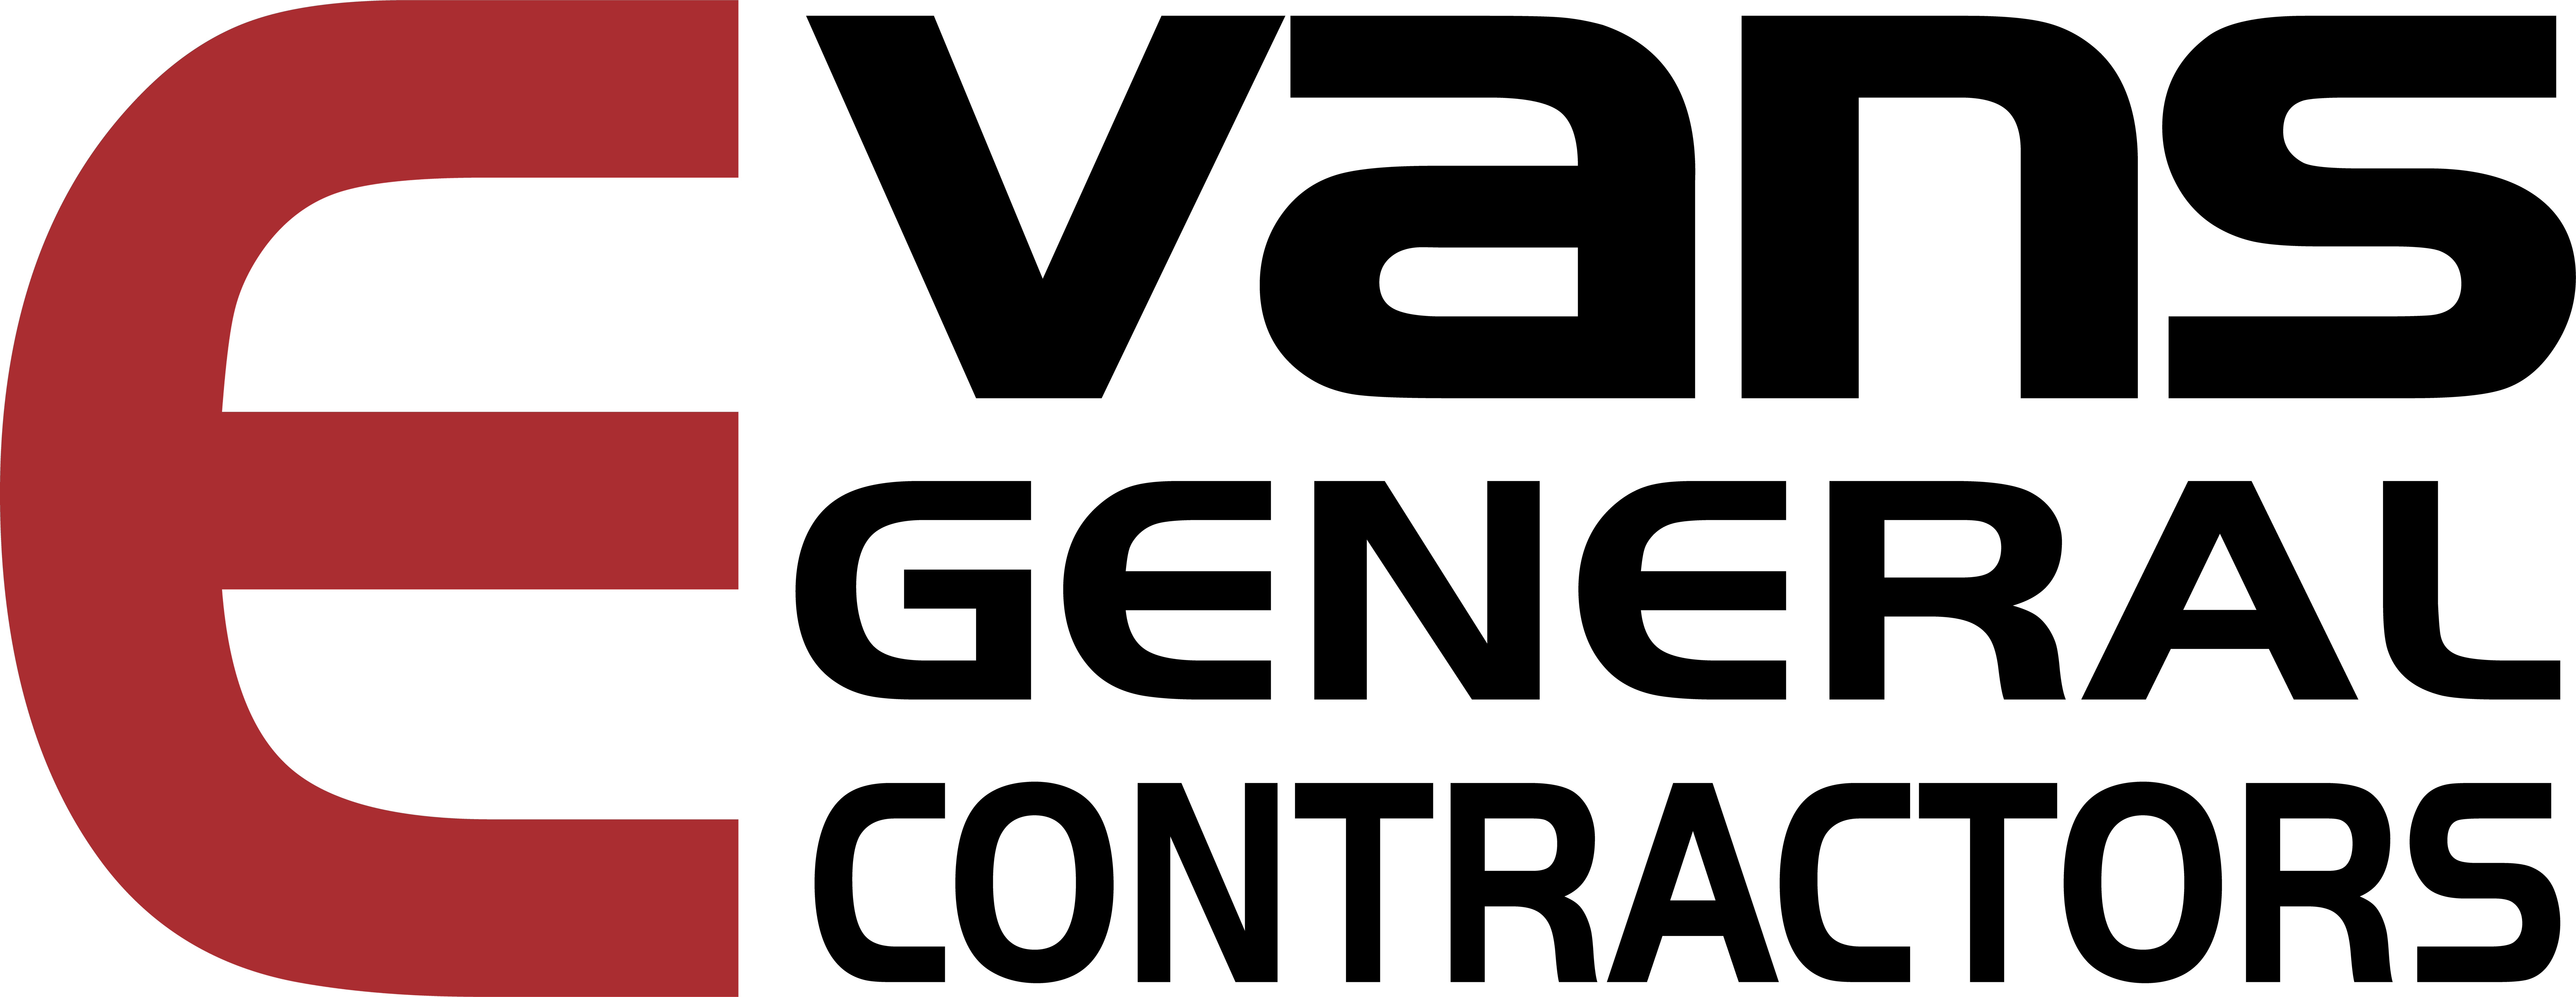 General Contractor Logo - Evans General Contractors – Design/Build, General Contracting ...